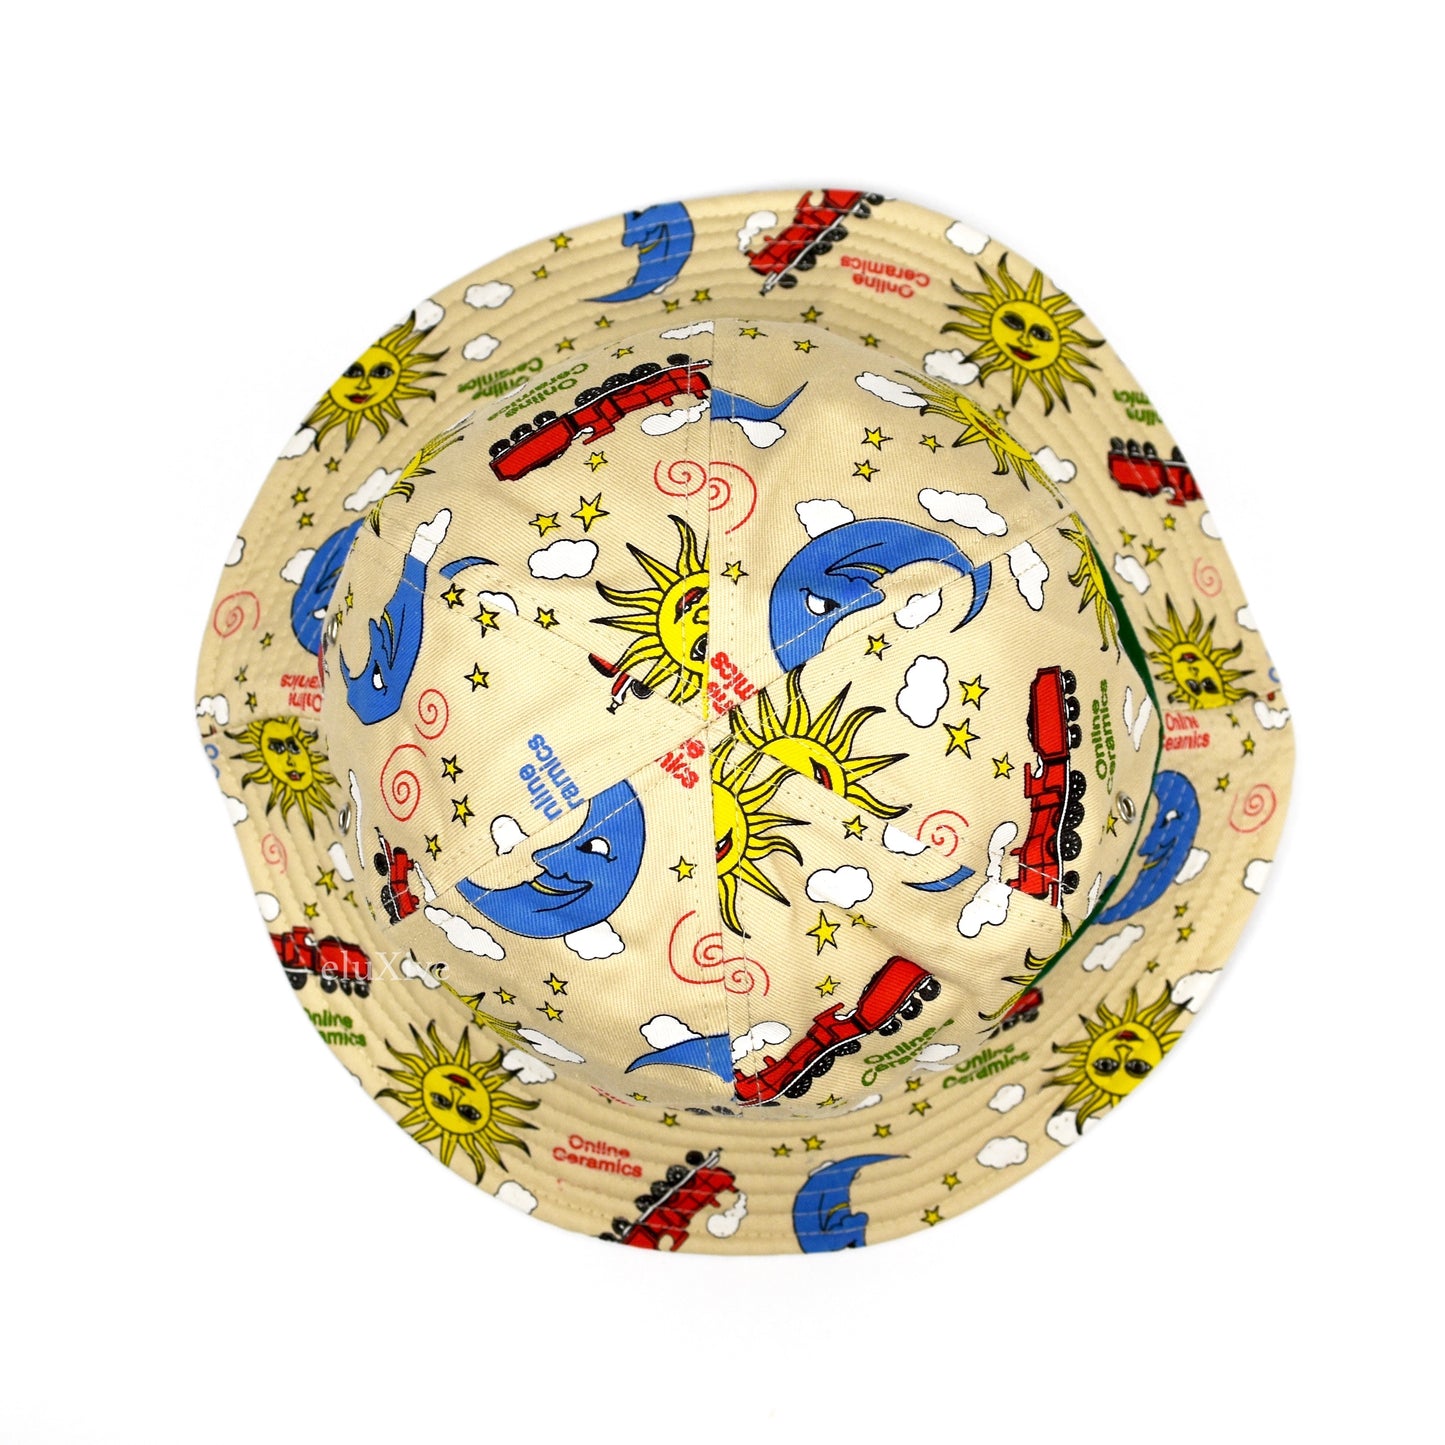 Online Ceramics - Choo Choo Logo Print Bucket Hat